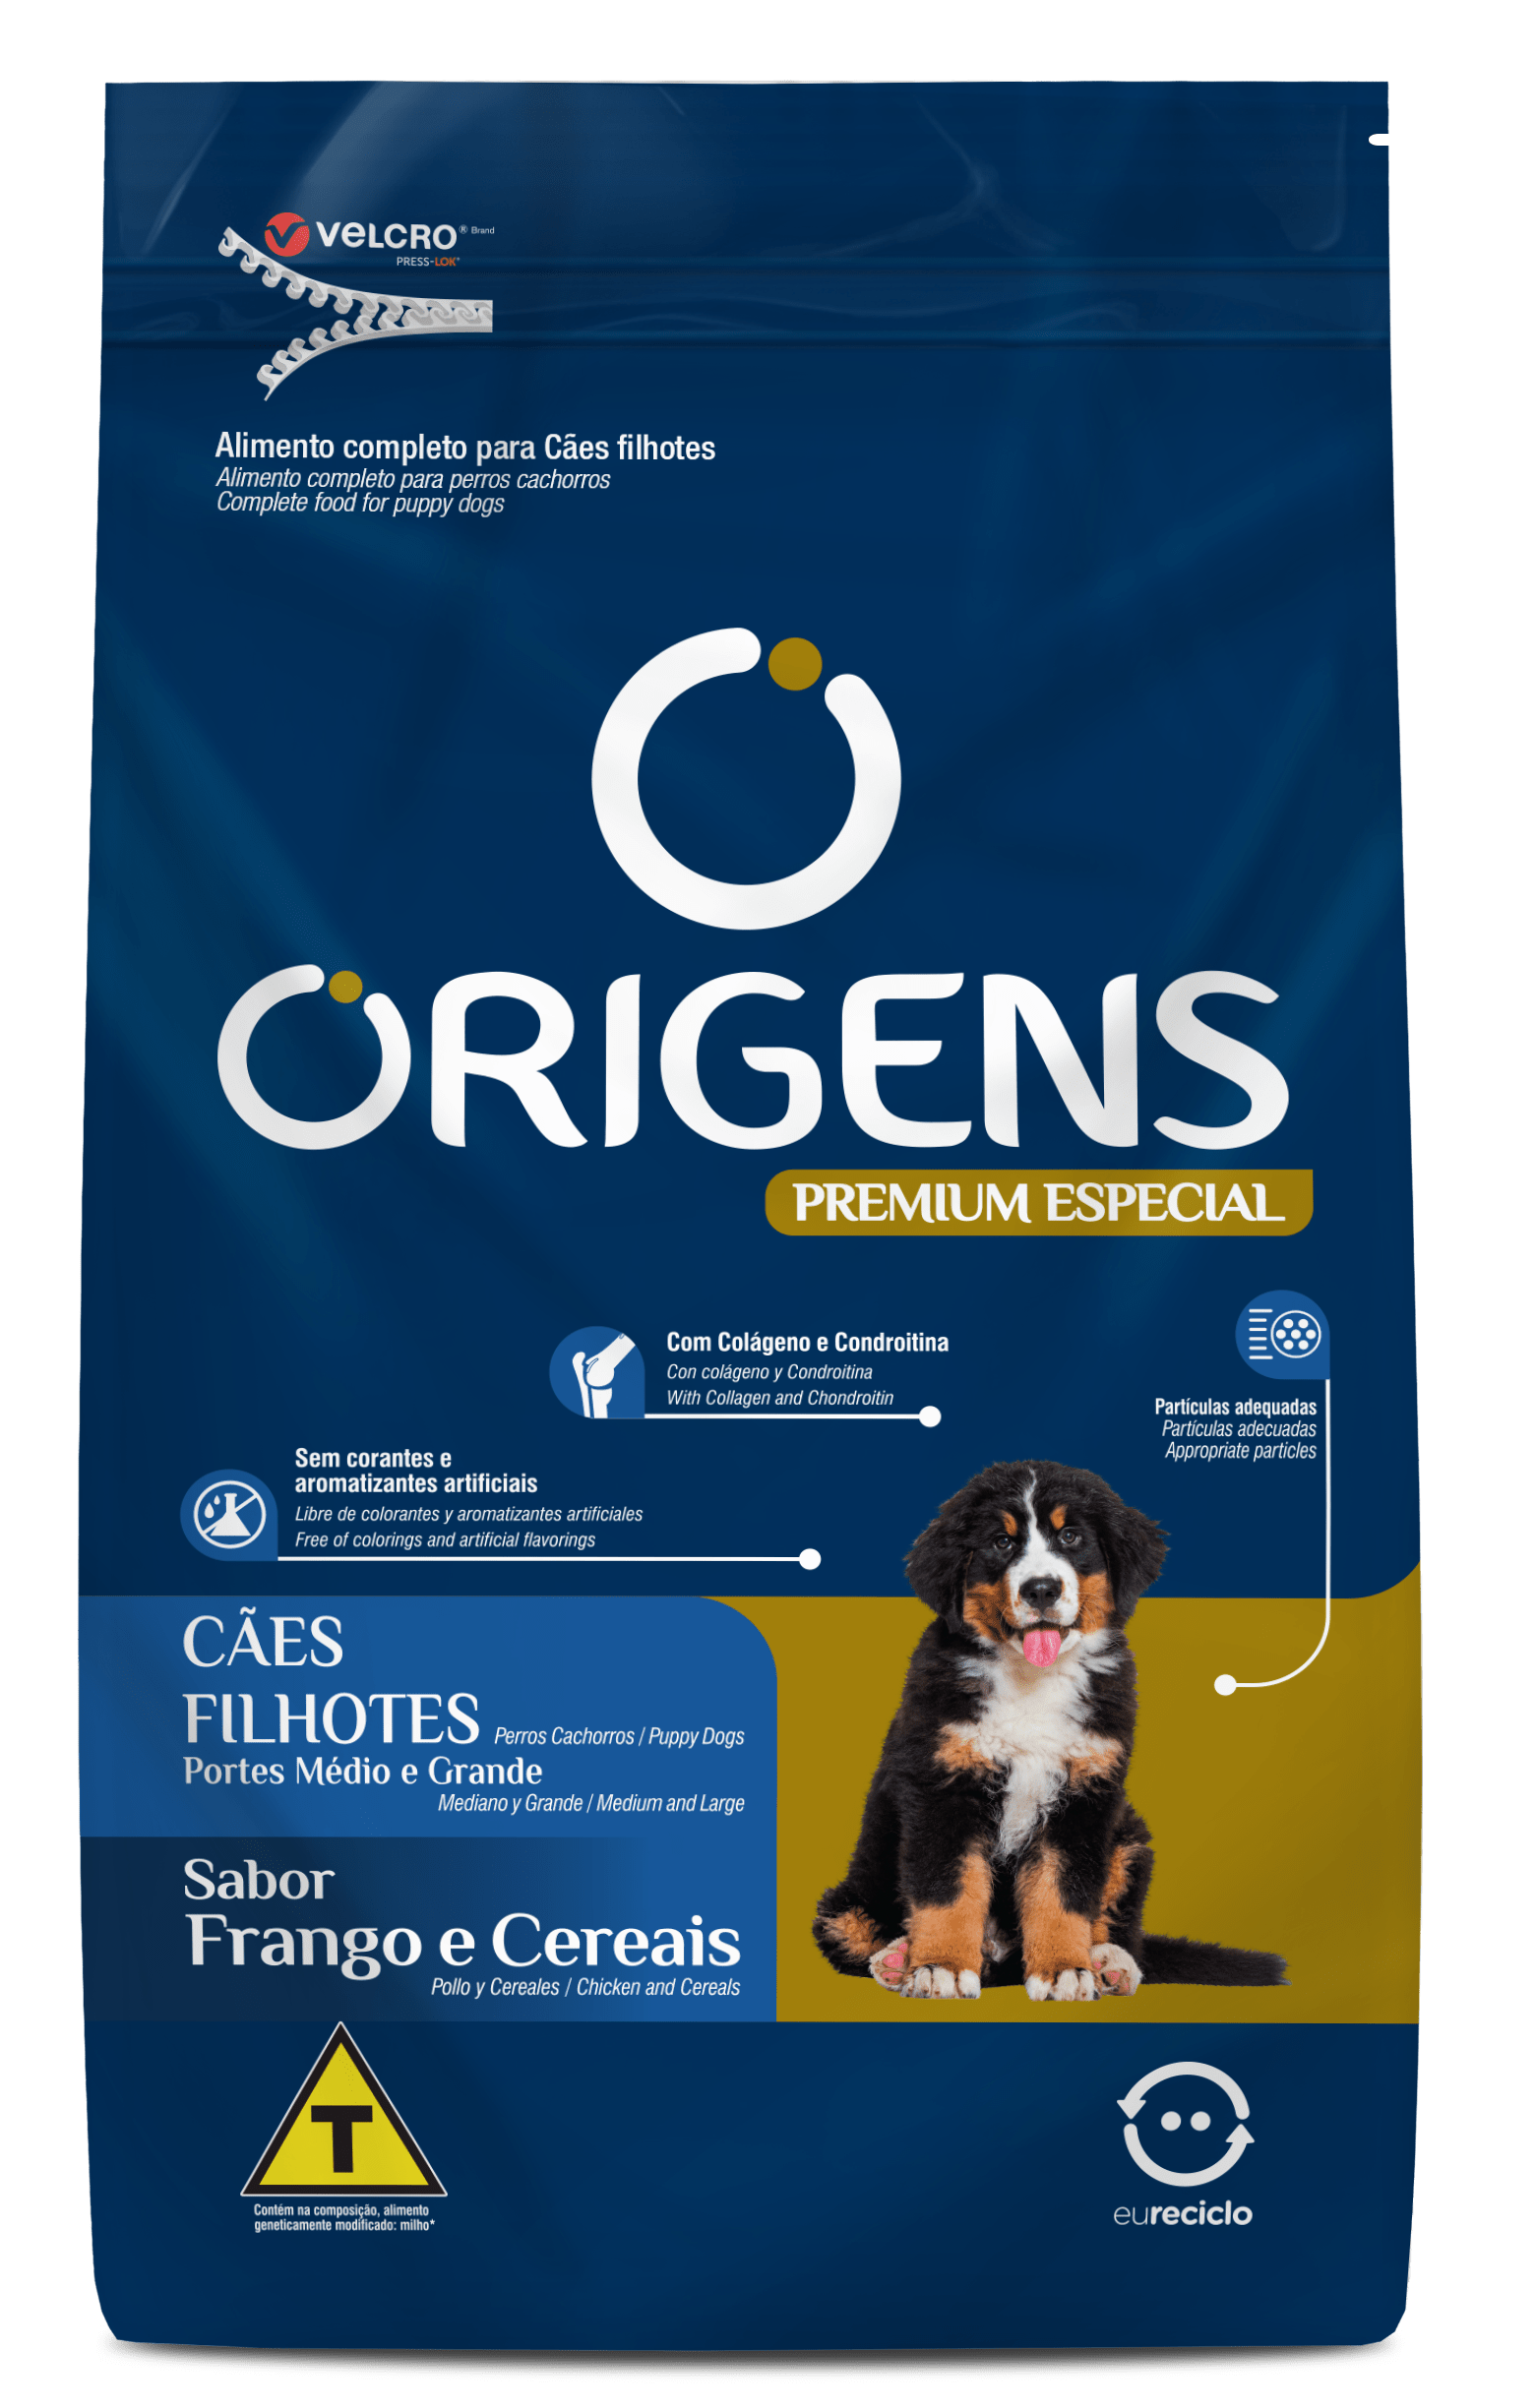 Origens Premium Especial Puppies Medium and Large Breed Chicken and Cereals Flavor